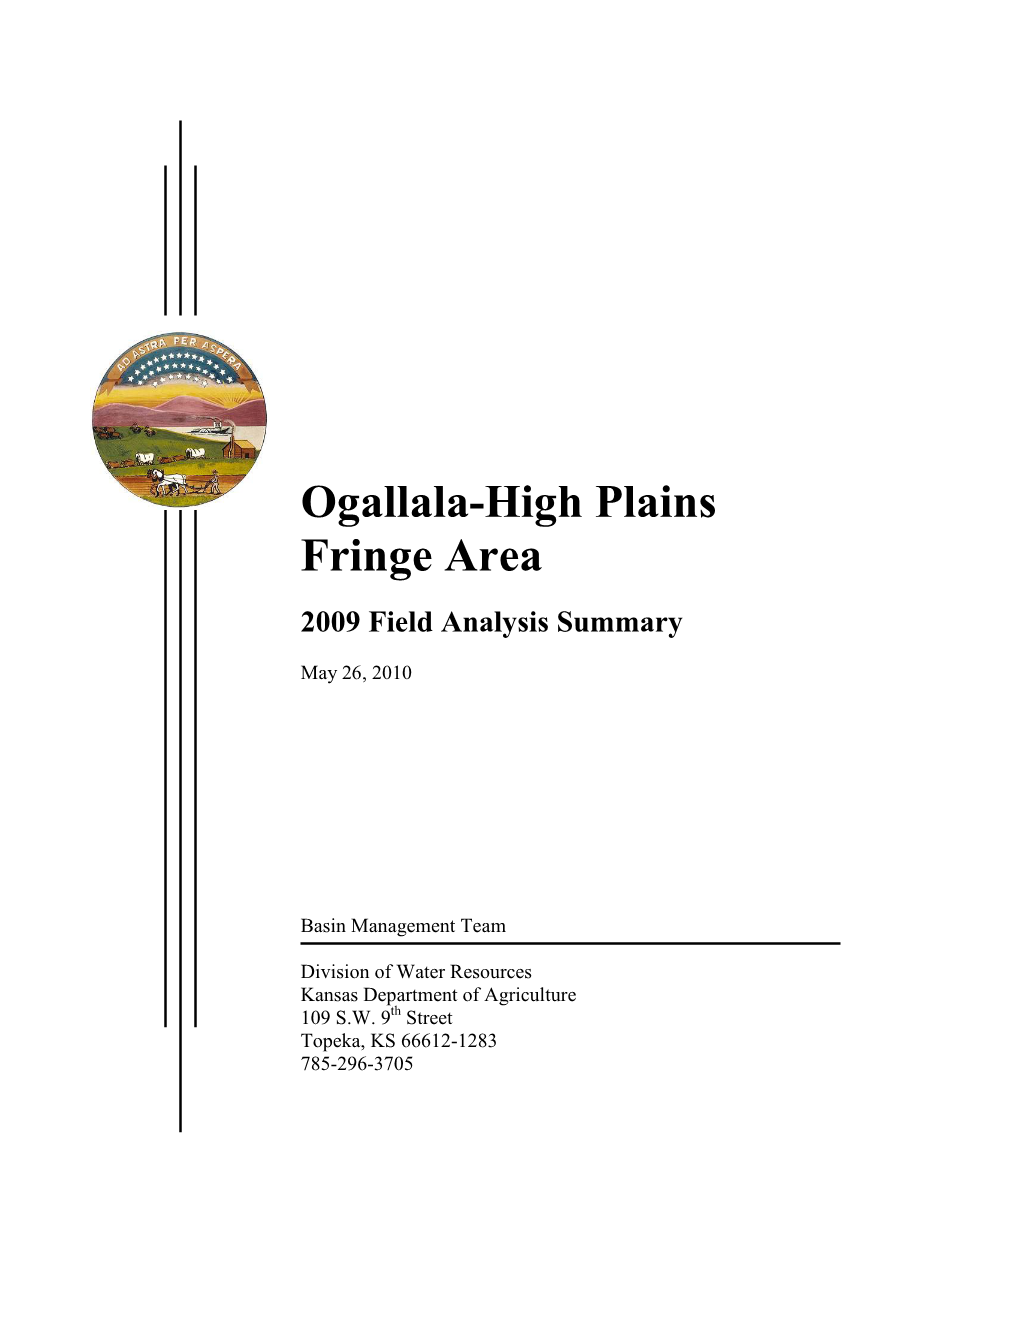 Ogallala-High Plains Fringe Area